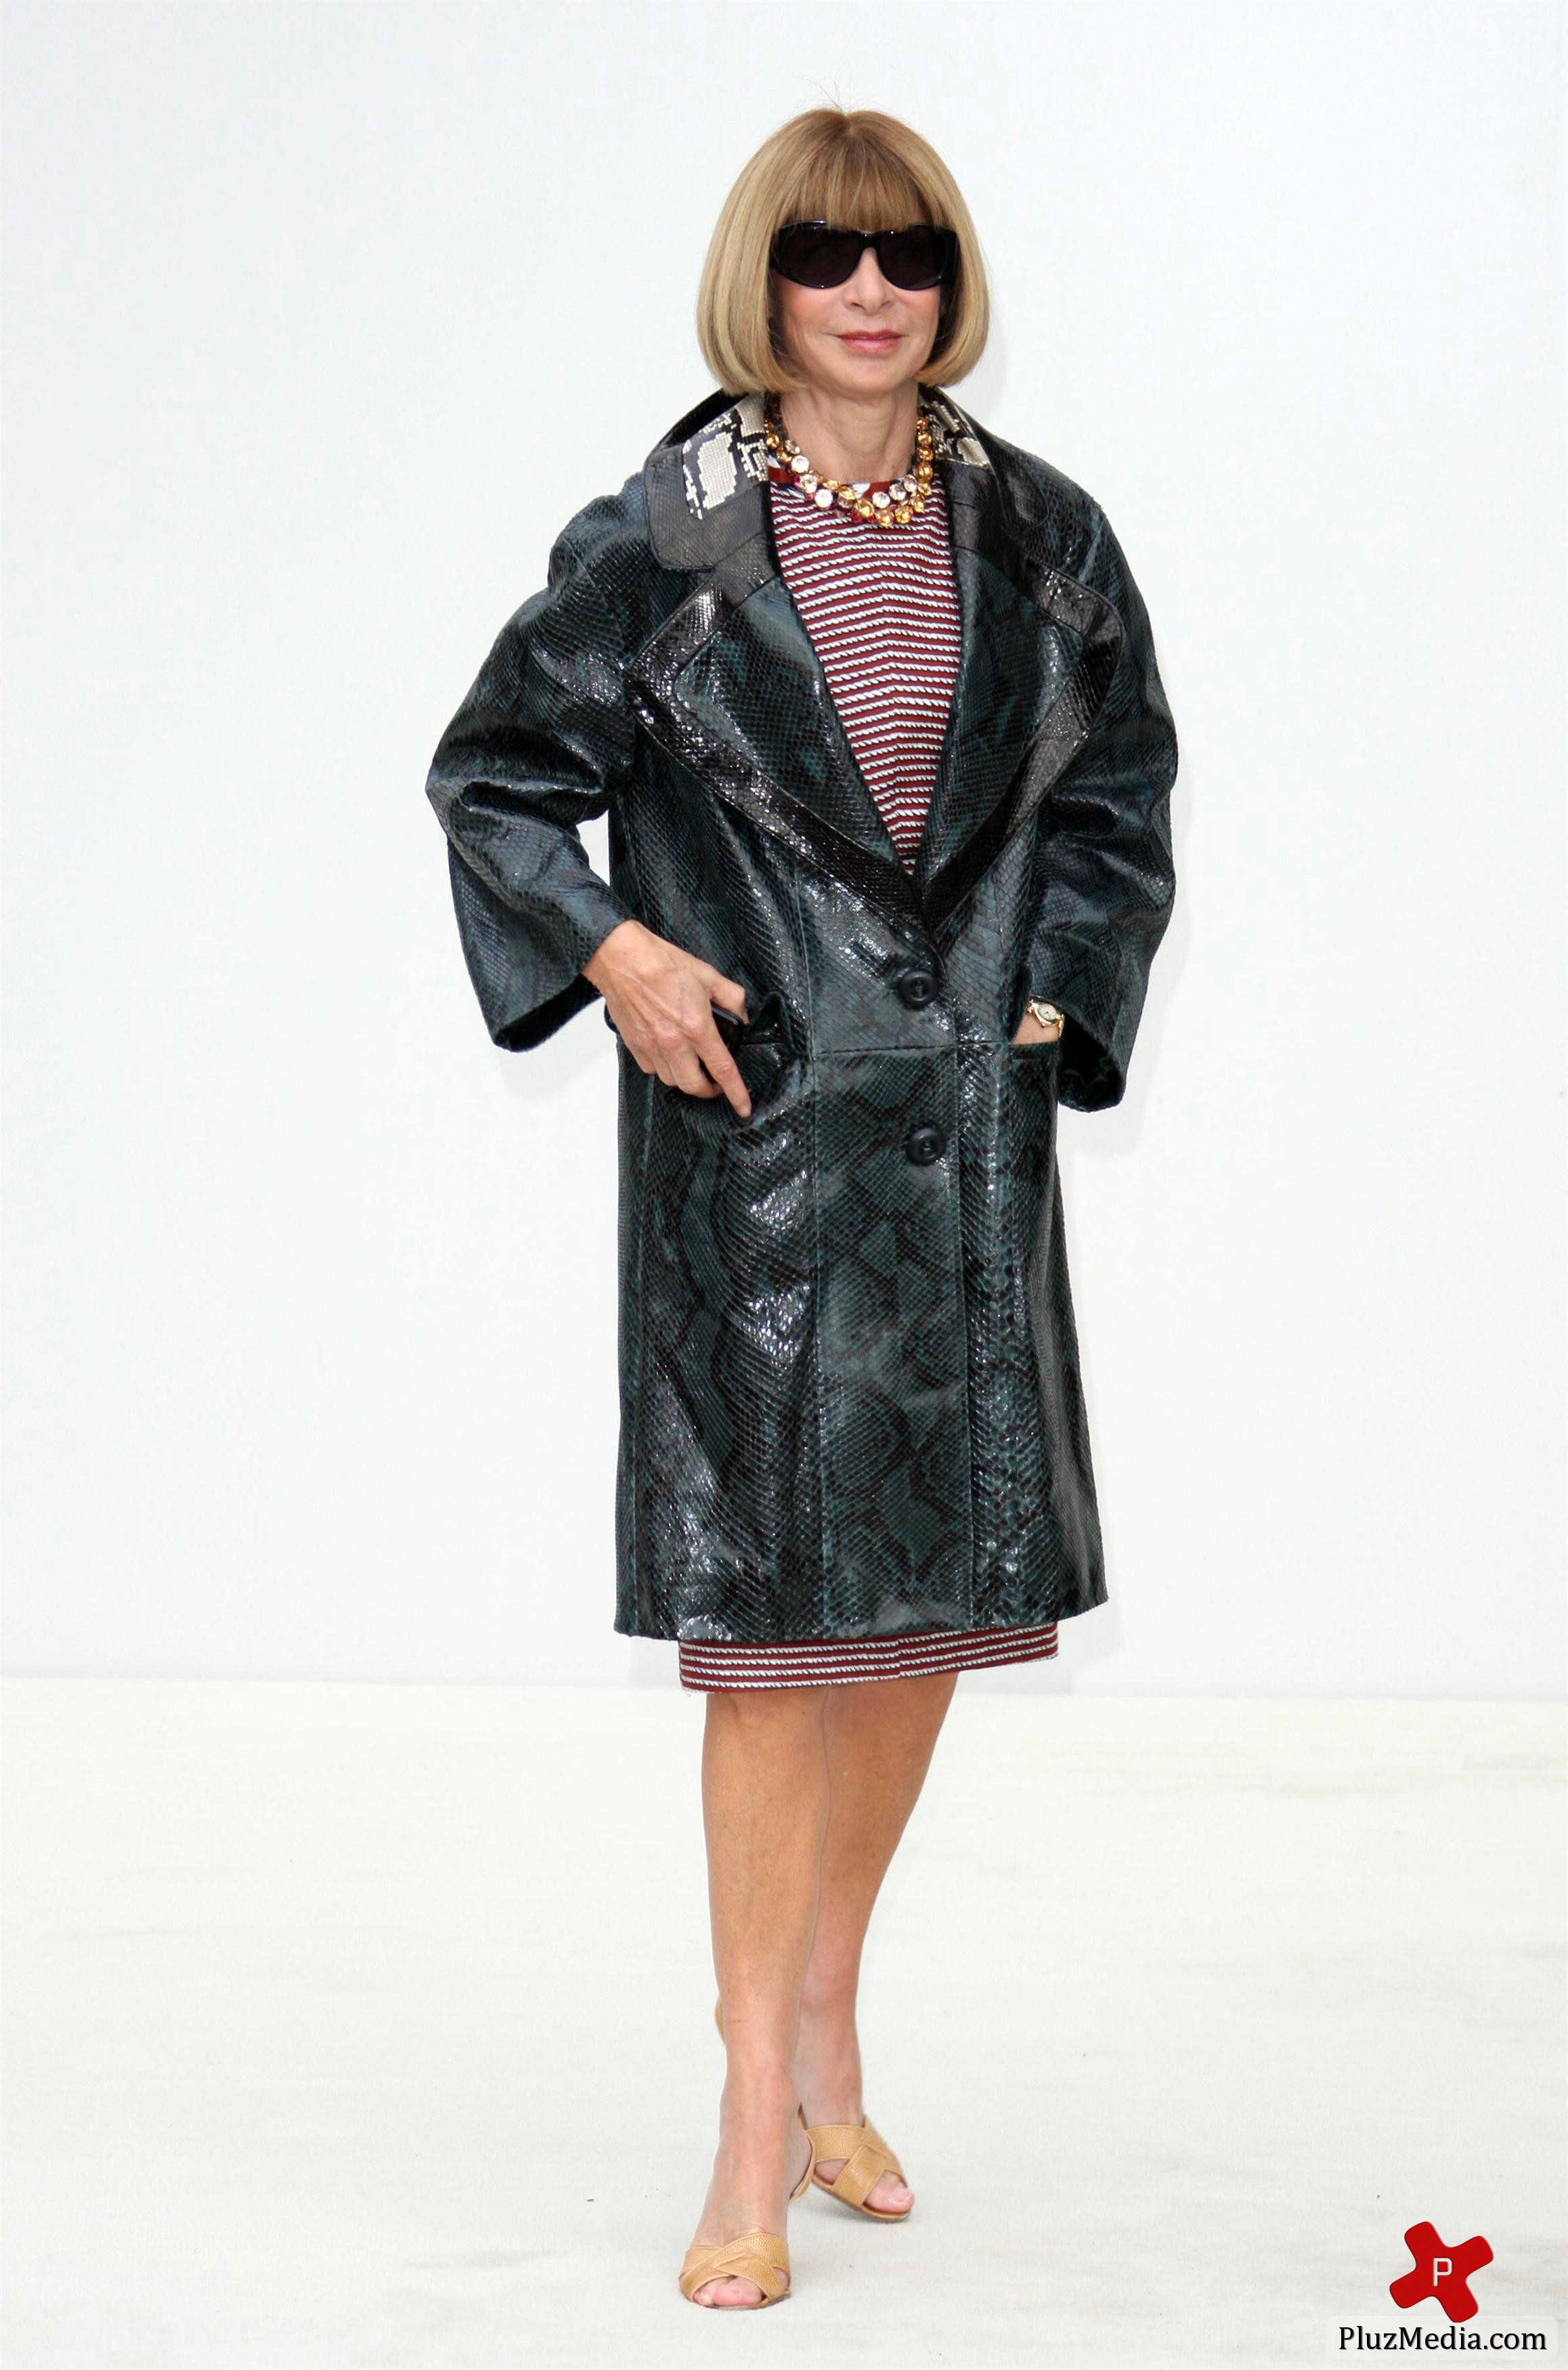 Anna Wintour - London Fashion Week Spring Summer 2012 - Burberry Prorsum - Arrivals | Picture 81718